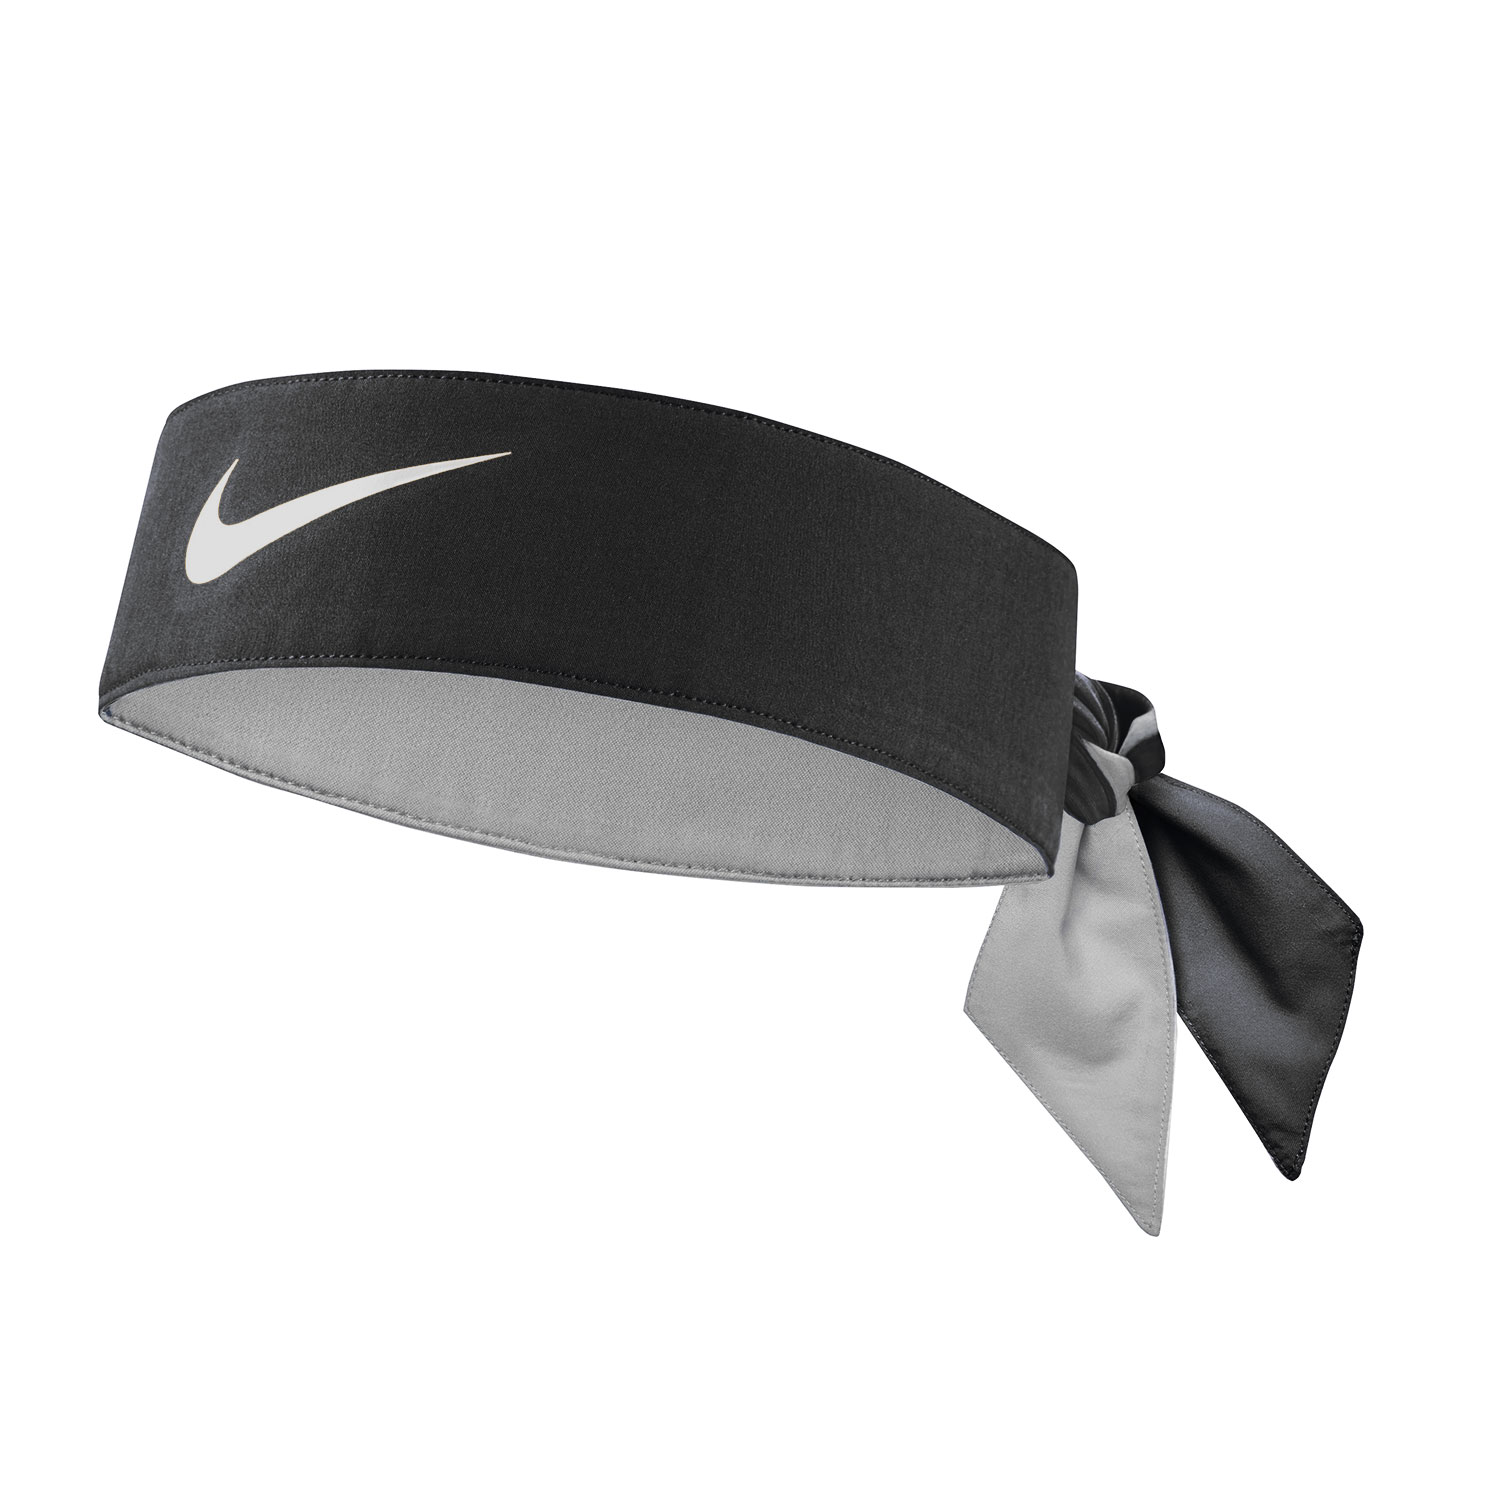 Transitorio Tío o señor vóleibol Nike Dry Banda de Tenis - Black/White